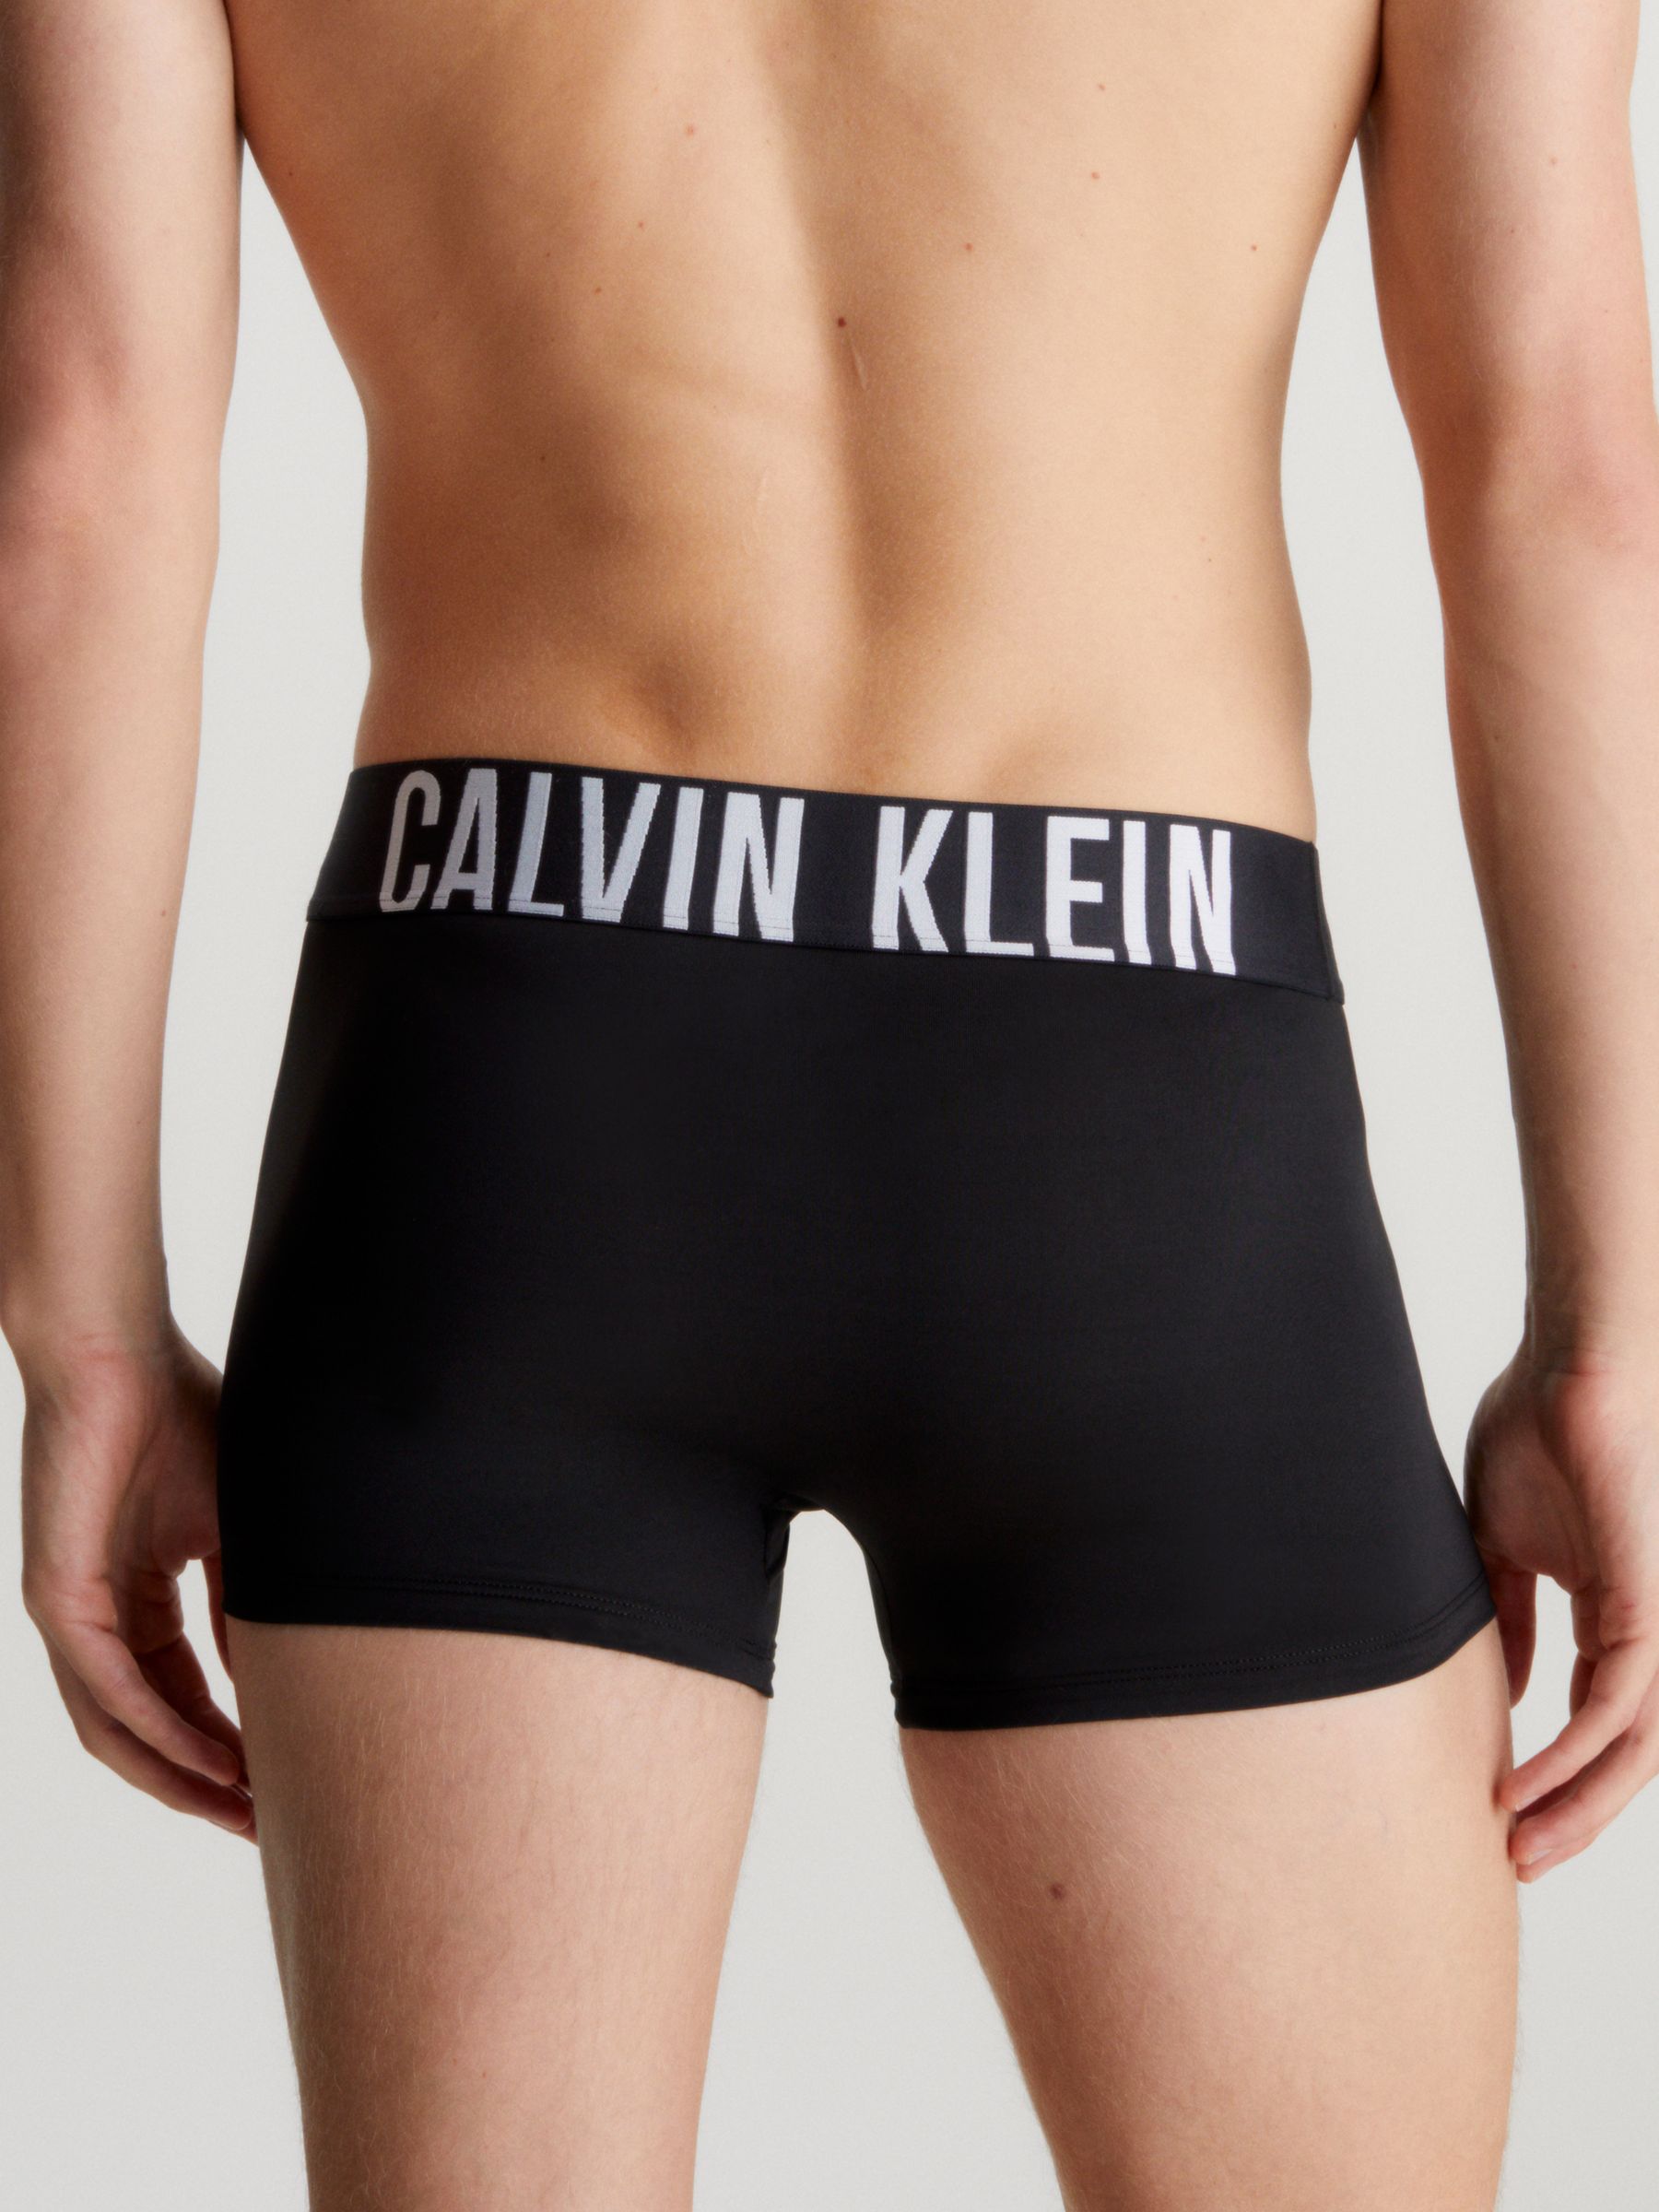 Buy Calvin Klein Intense Power Boxers, Pack of 3, Black Online at johnlewis.com